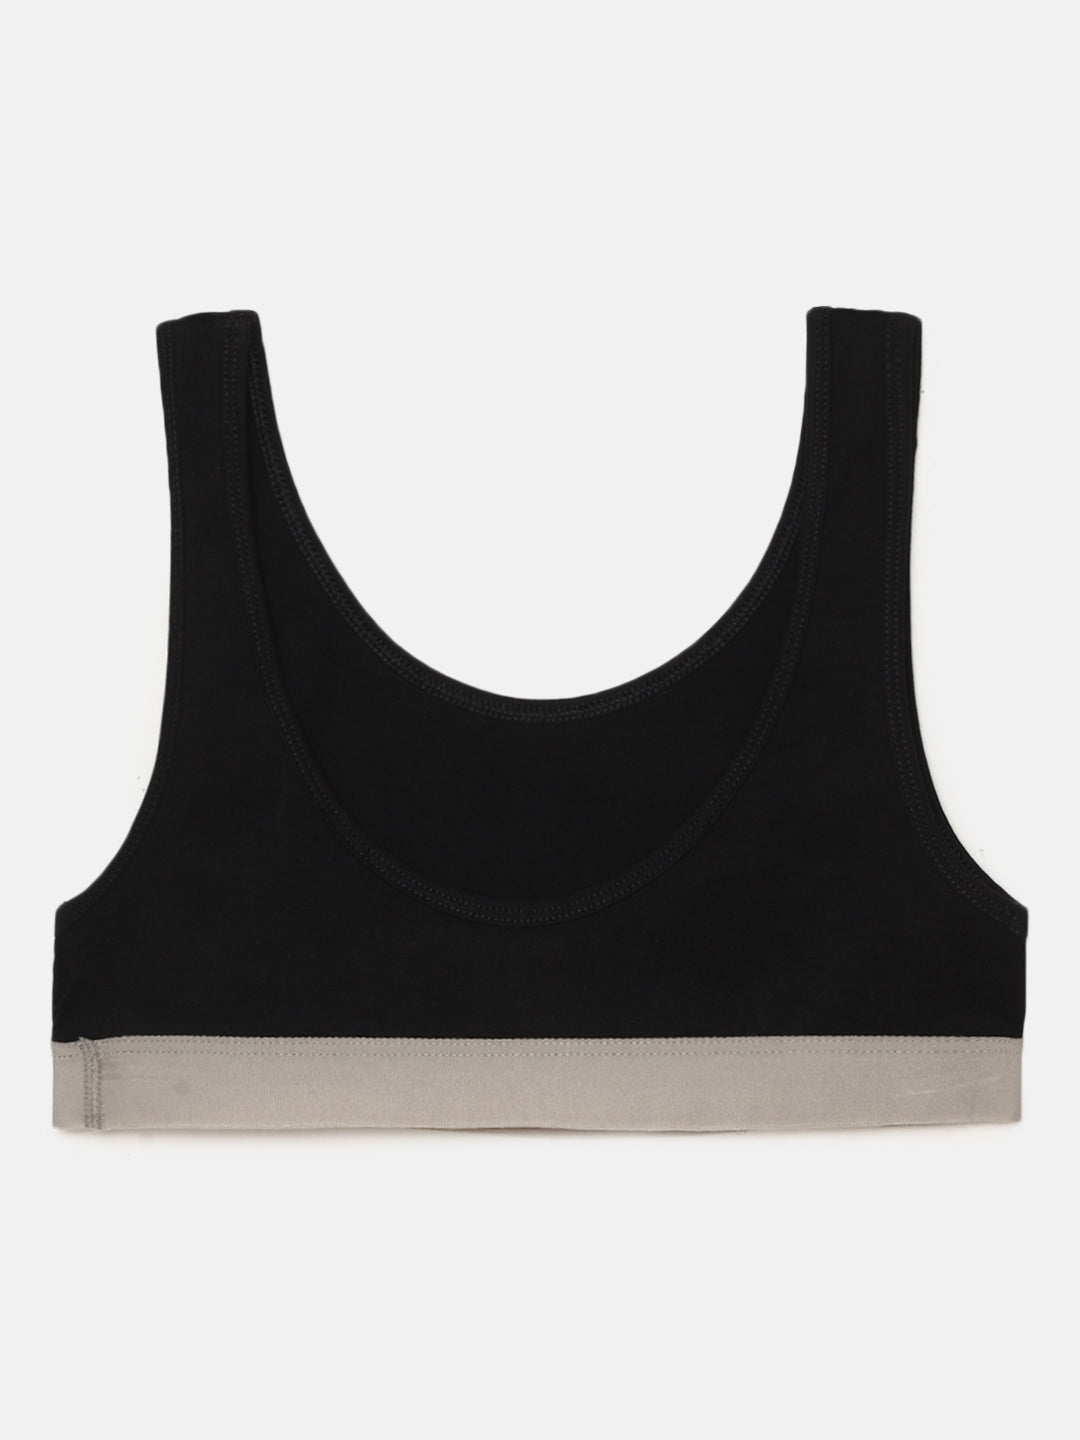 Grey / Black Mackly training bra